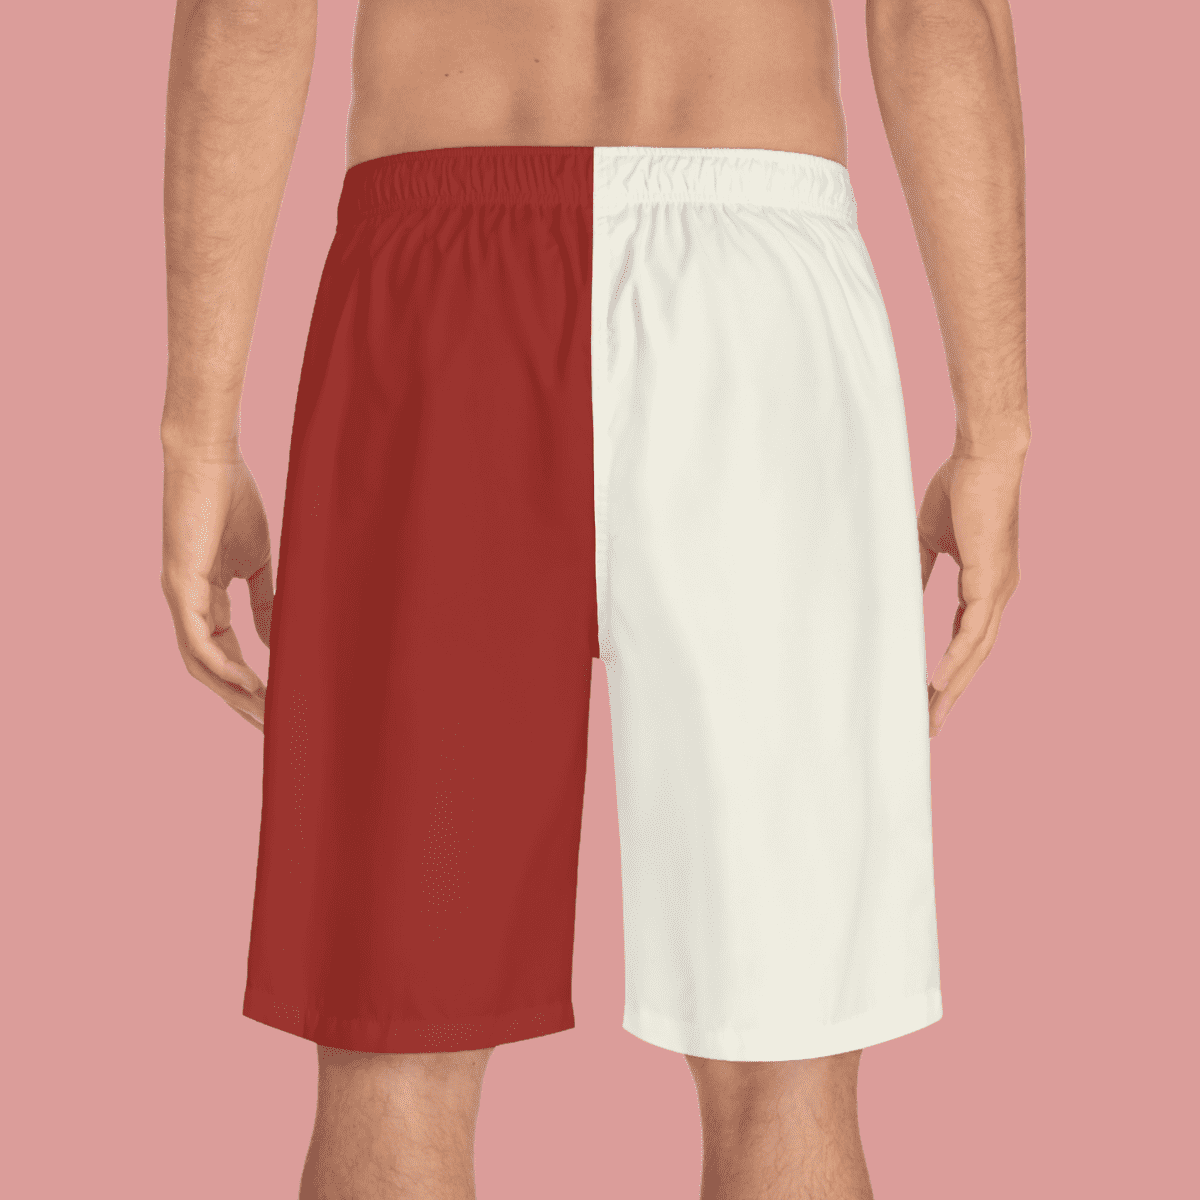 Men's Rust And Cream Board Shorts